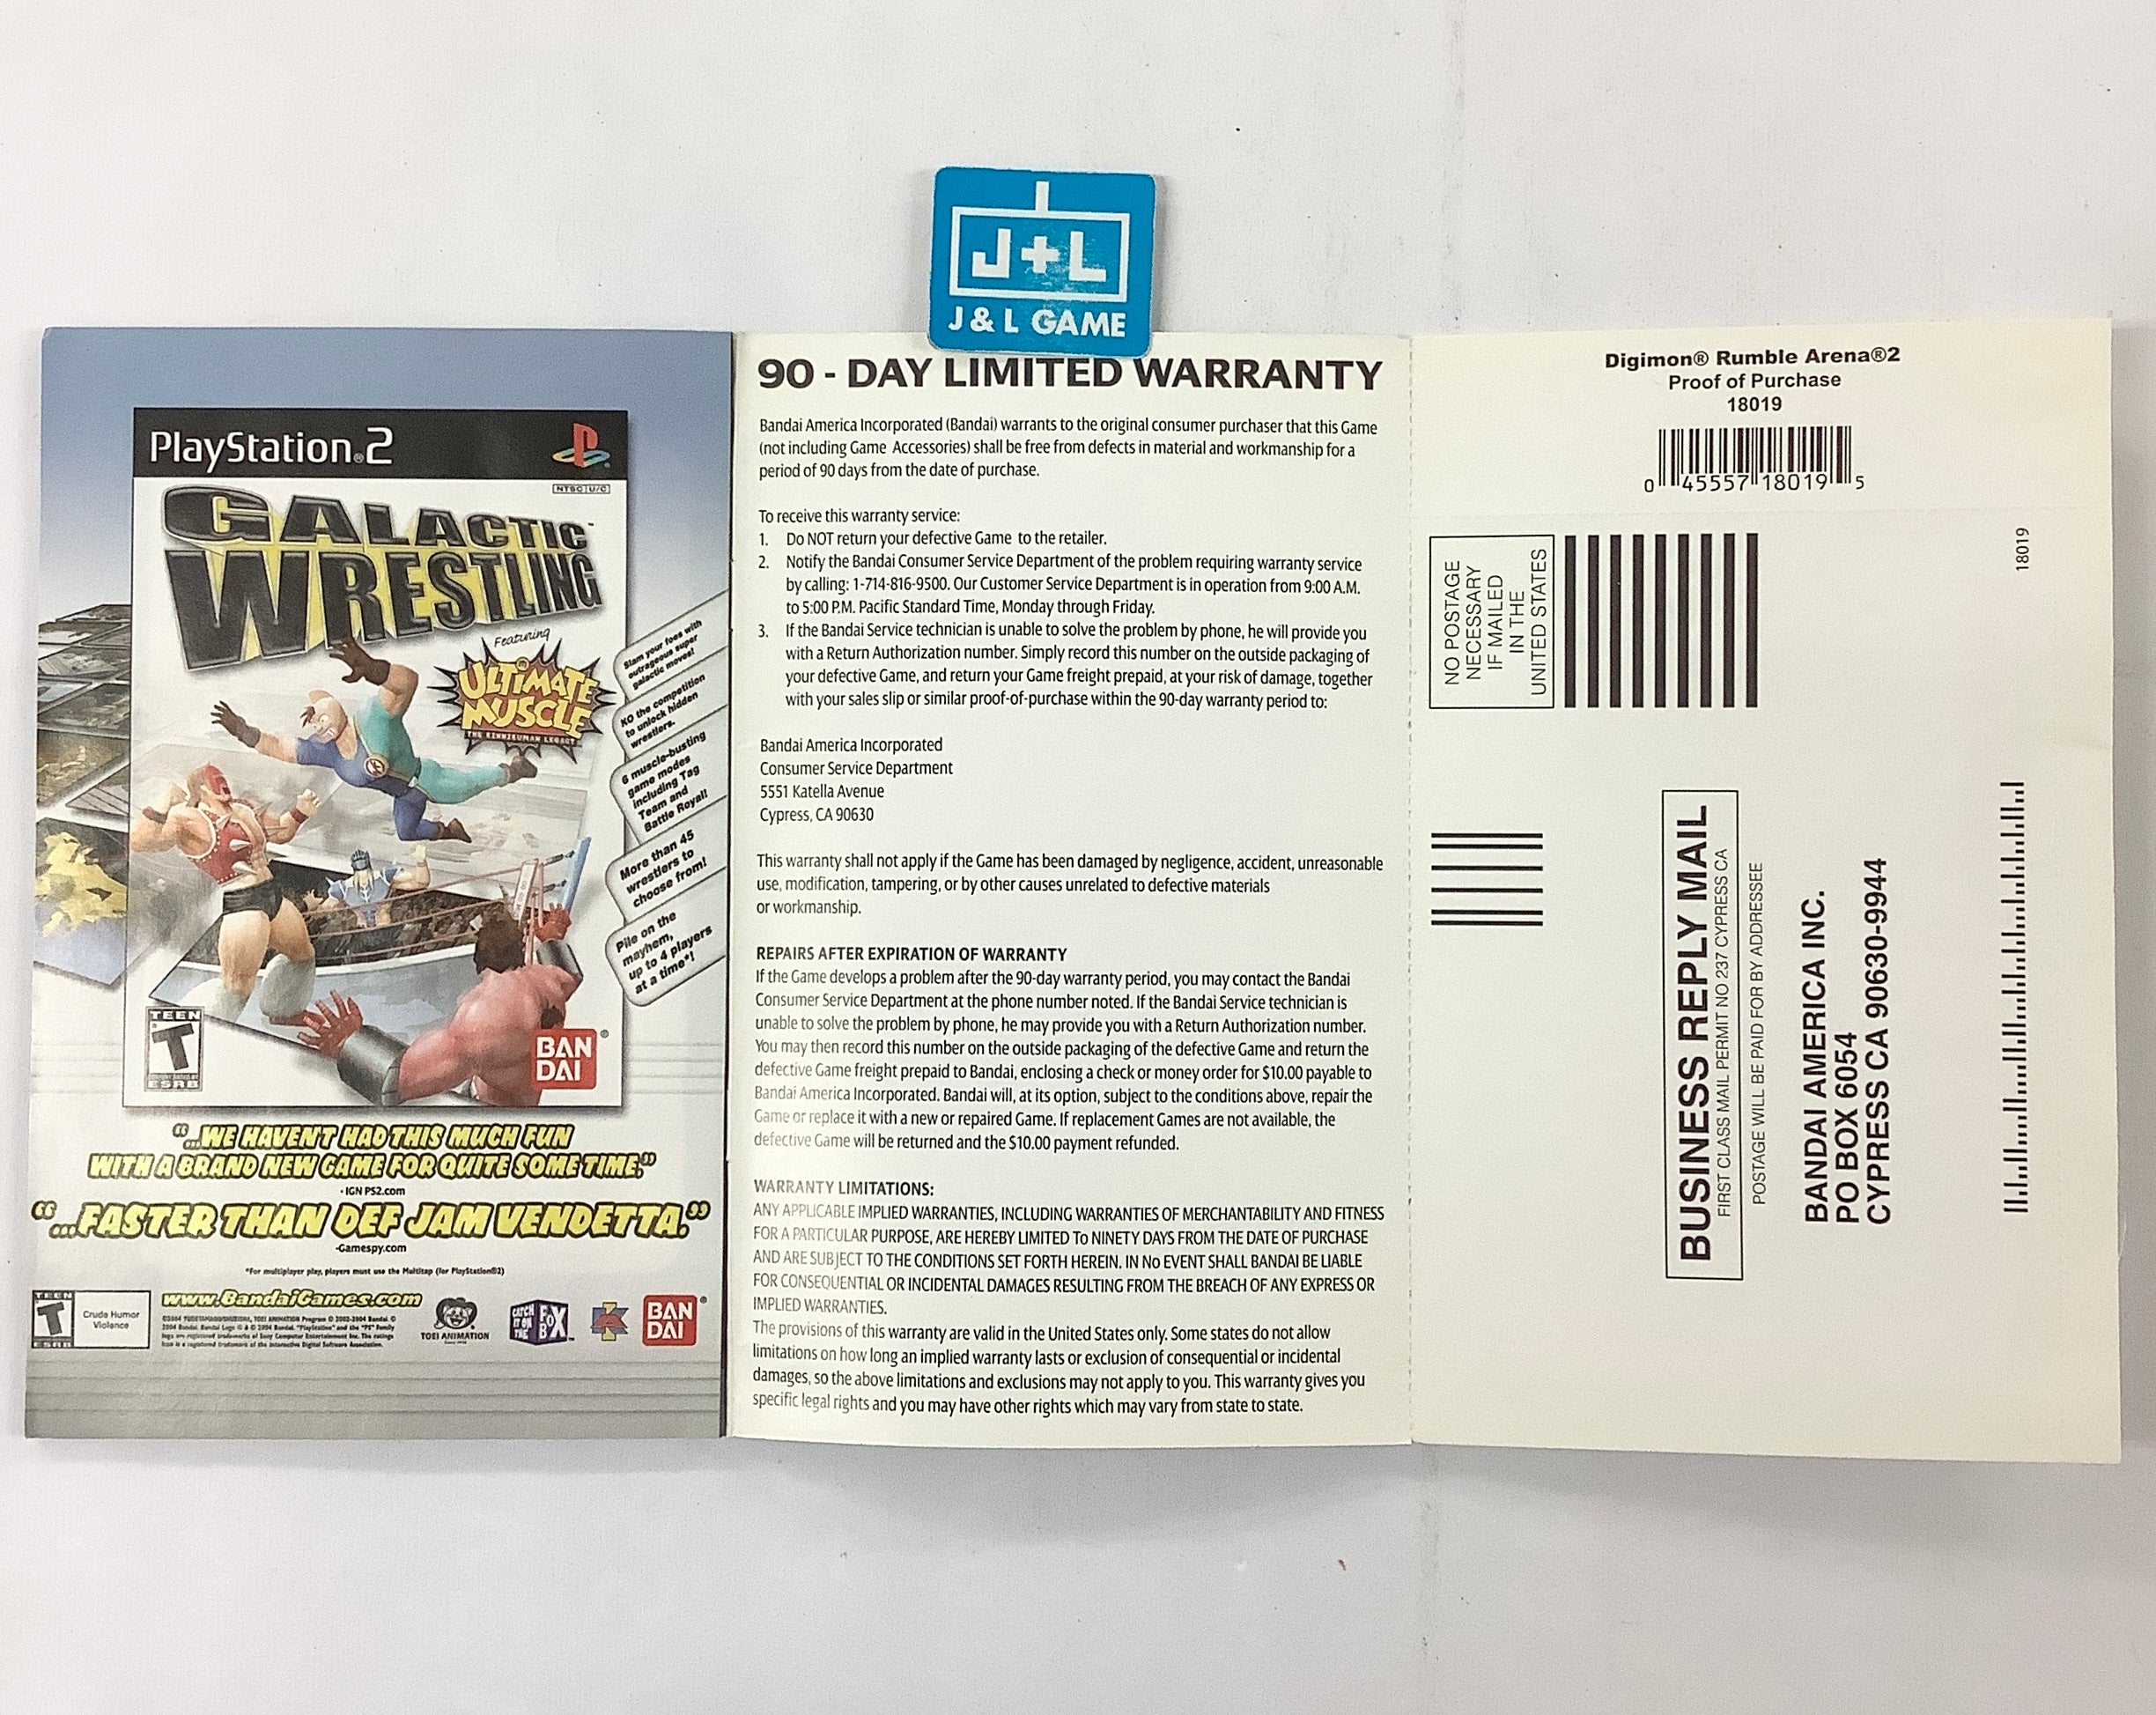 Digimon digital Monsters Rumble Arena 2 - (PS2) PlayStation 2 [Pre-Owned] Video Games Bandai   